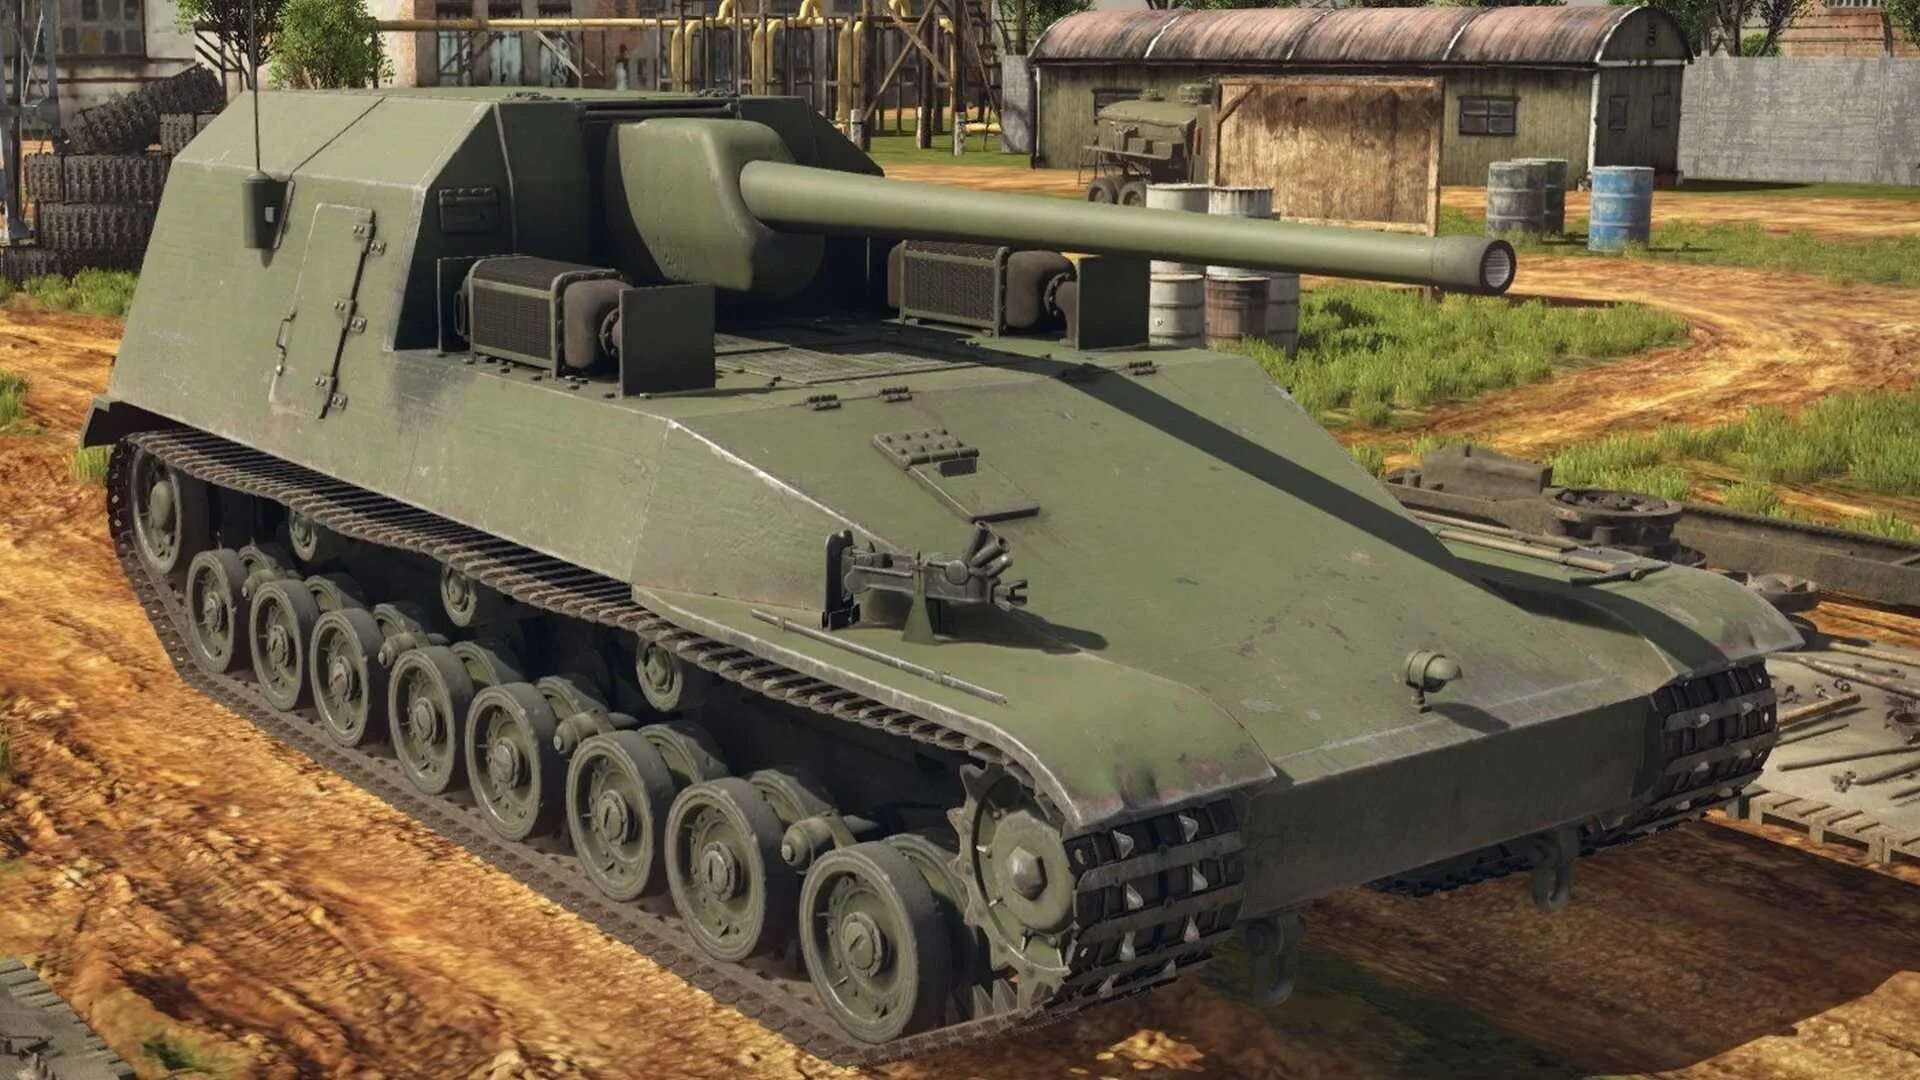 Type 5 ho-RI. Хо Ри тайп 2. Танк ho RI Prototype. Type 5 ho-RI II. Мир танков японские